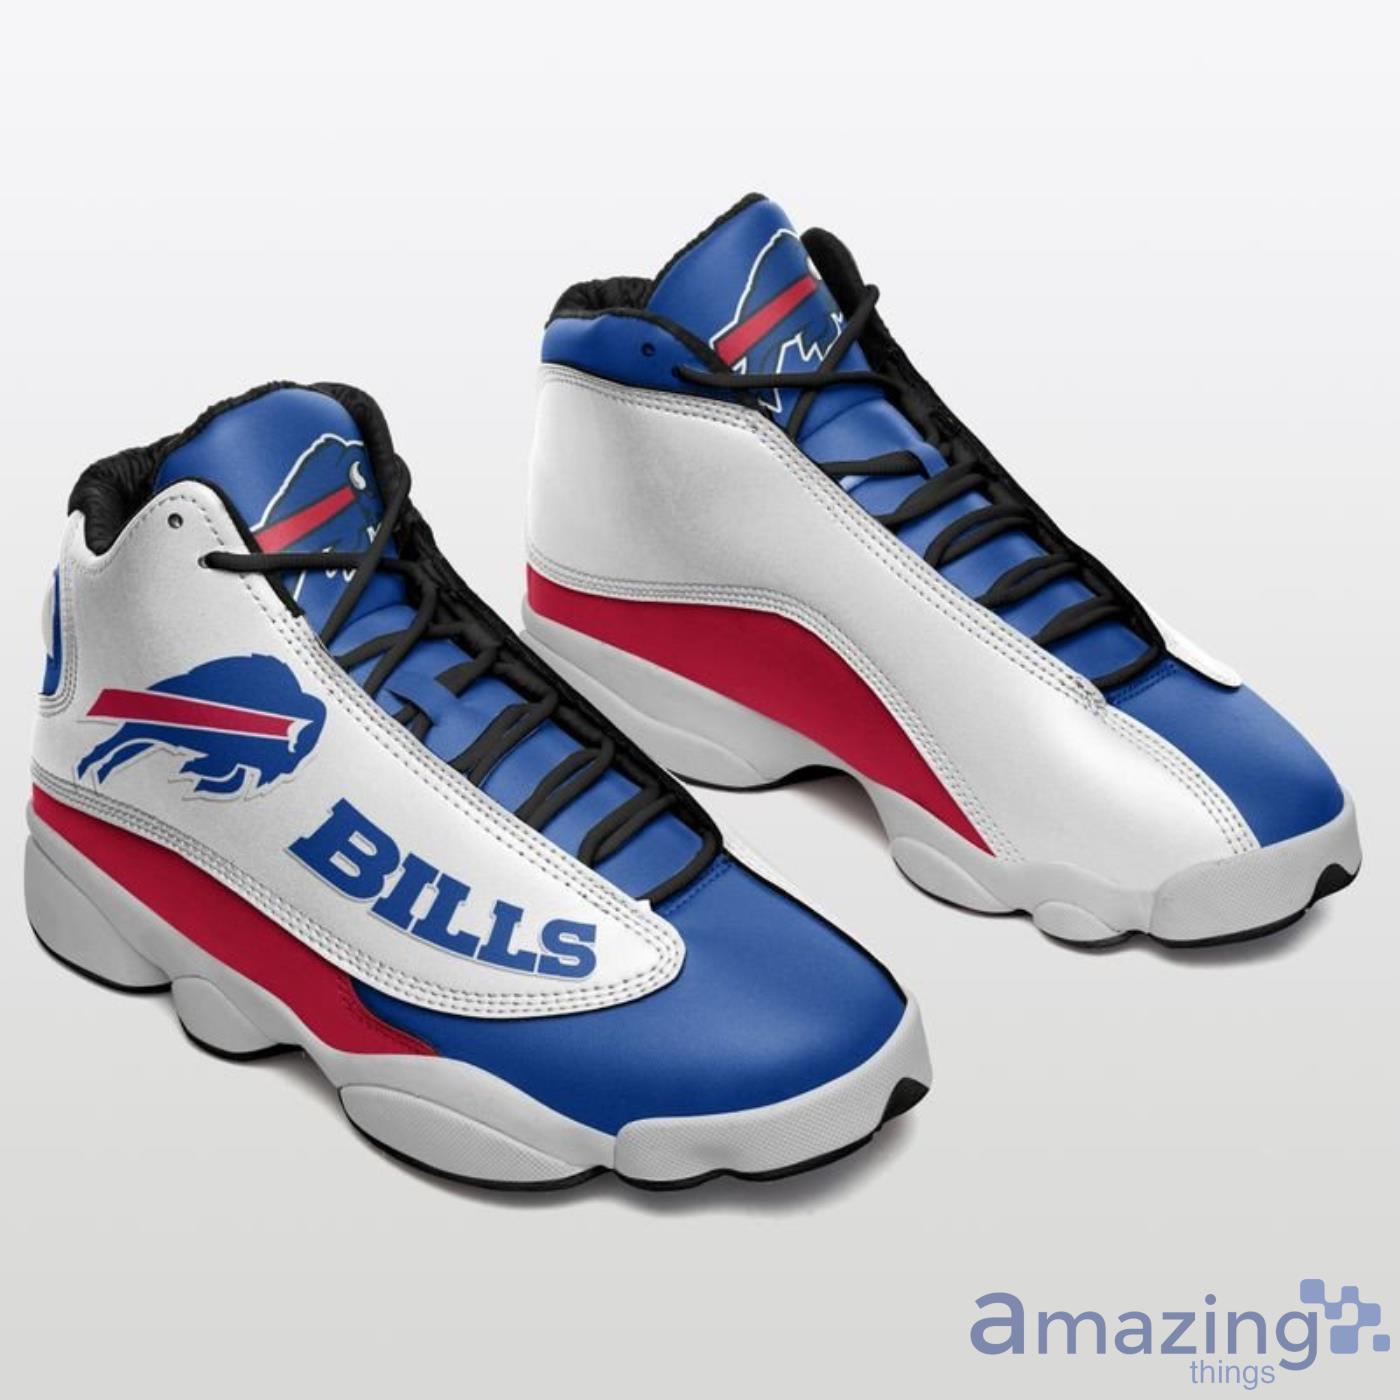 Nfl Buffalo Bills Limited Edition Air Jordan Jordan 13 For Fans 13 Sneakers Product Photo 1